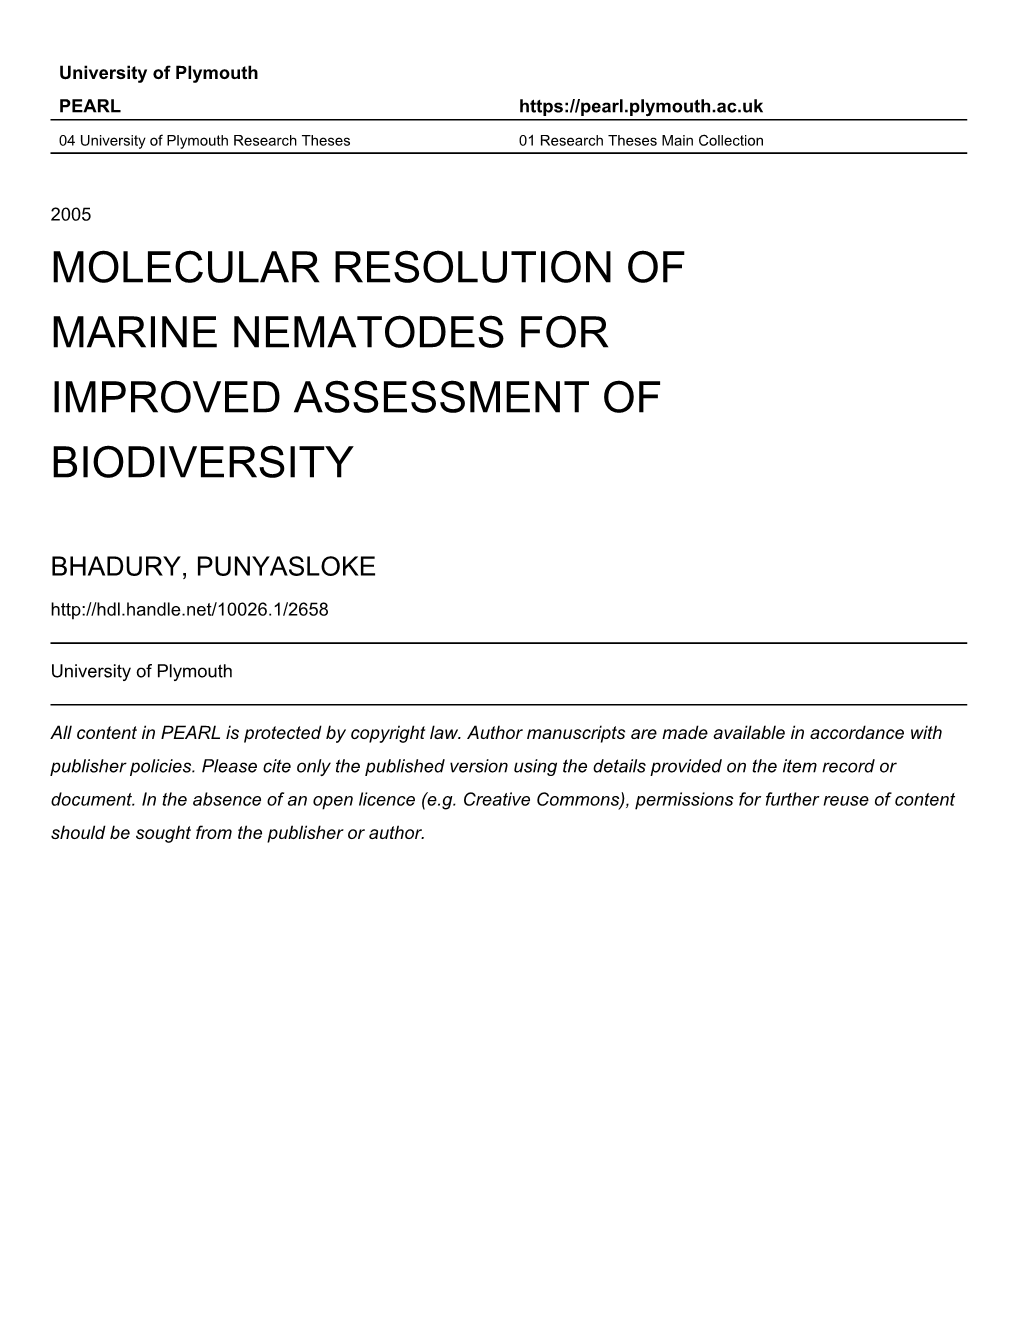 Molecular Resolution of Marine Nematodes for Improved Assessment of Biodiversity